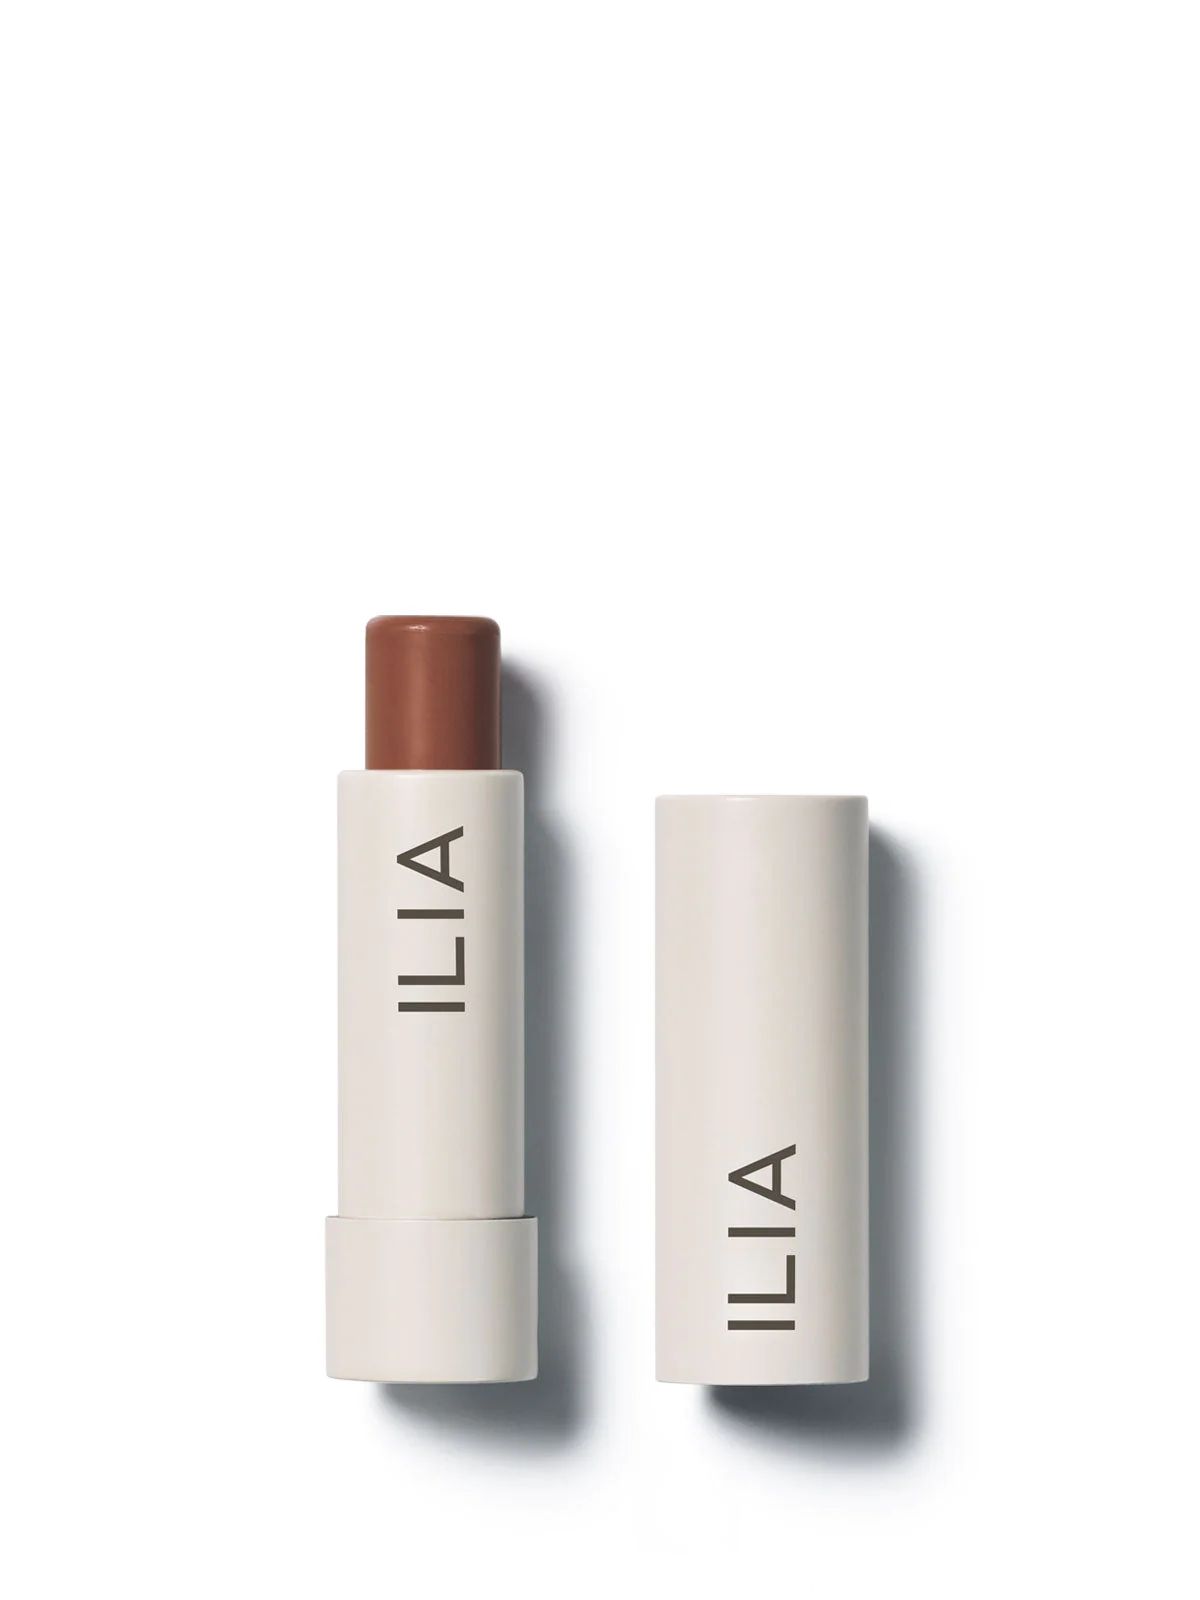 ILIA Balmy Tint: Neutral Cocoa Brown - Hydrating Lip Balm | ILIA Beauty Canada Canada | ILIA Beauty